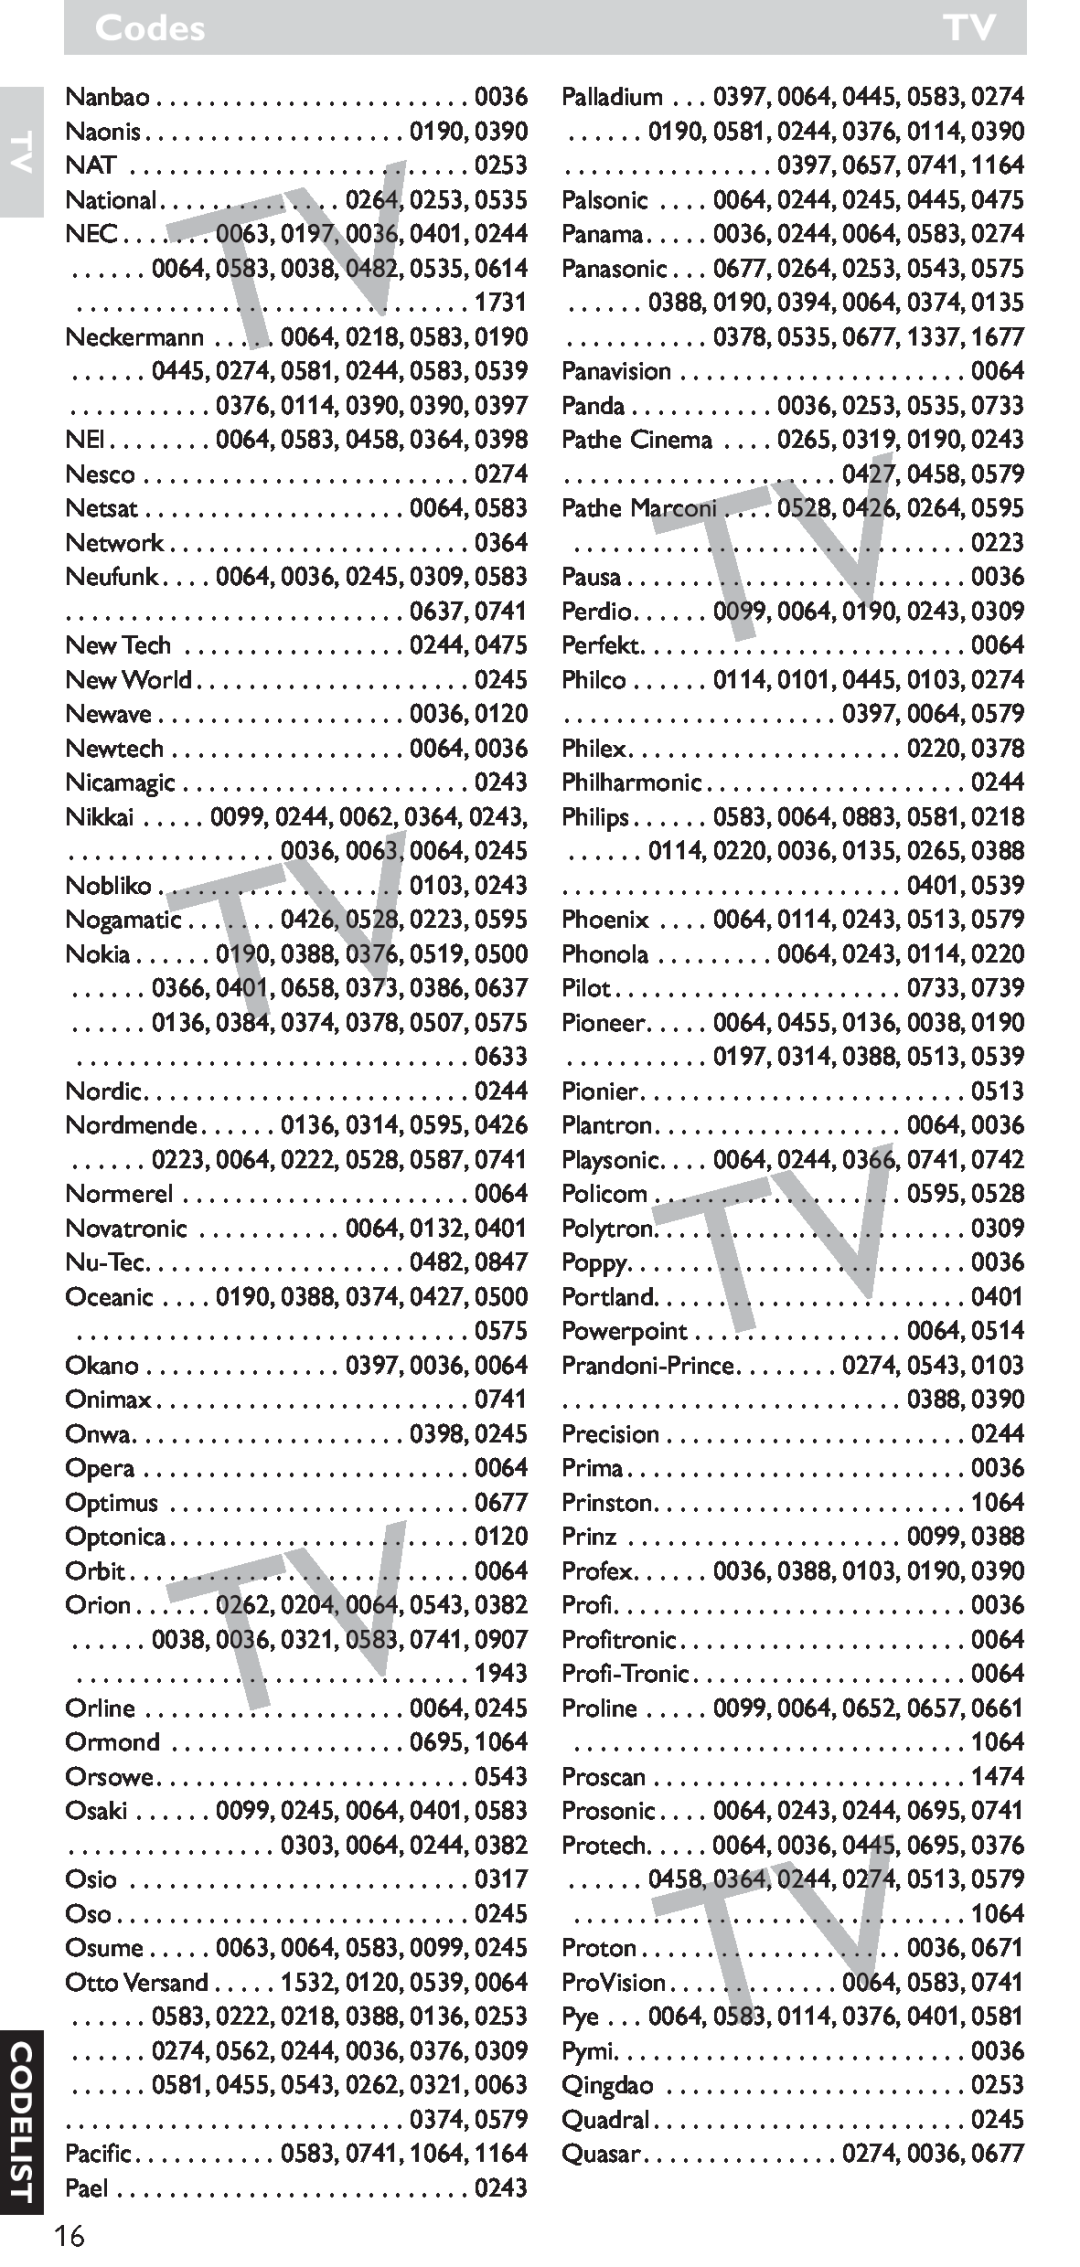 Hitachi SRU 5040/05 manual Codes, Tv Codelist, TV. . . . . . . . . . . . . . . . . . 0064, PowerpointTV 